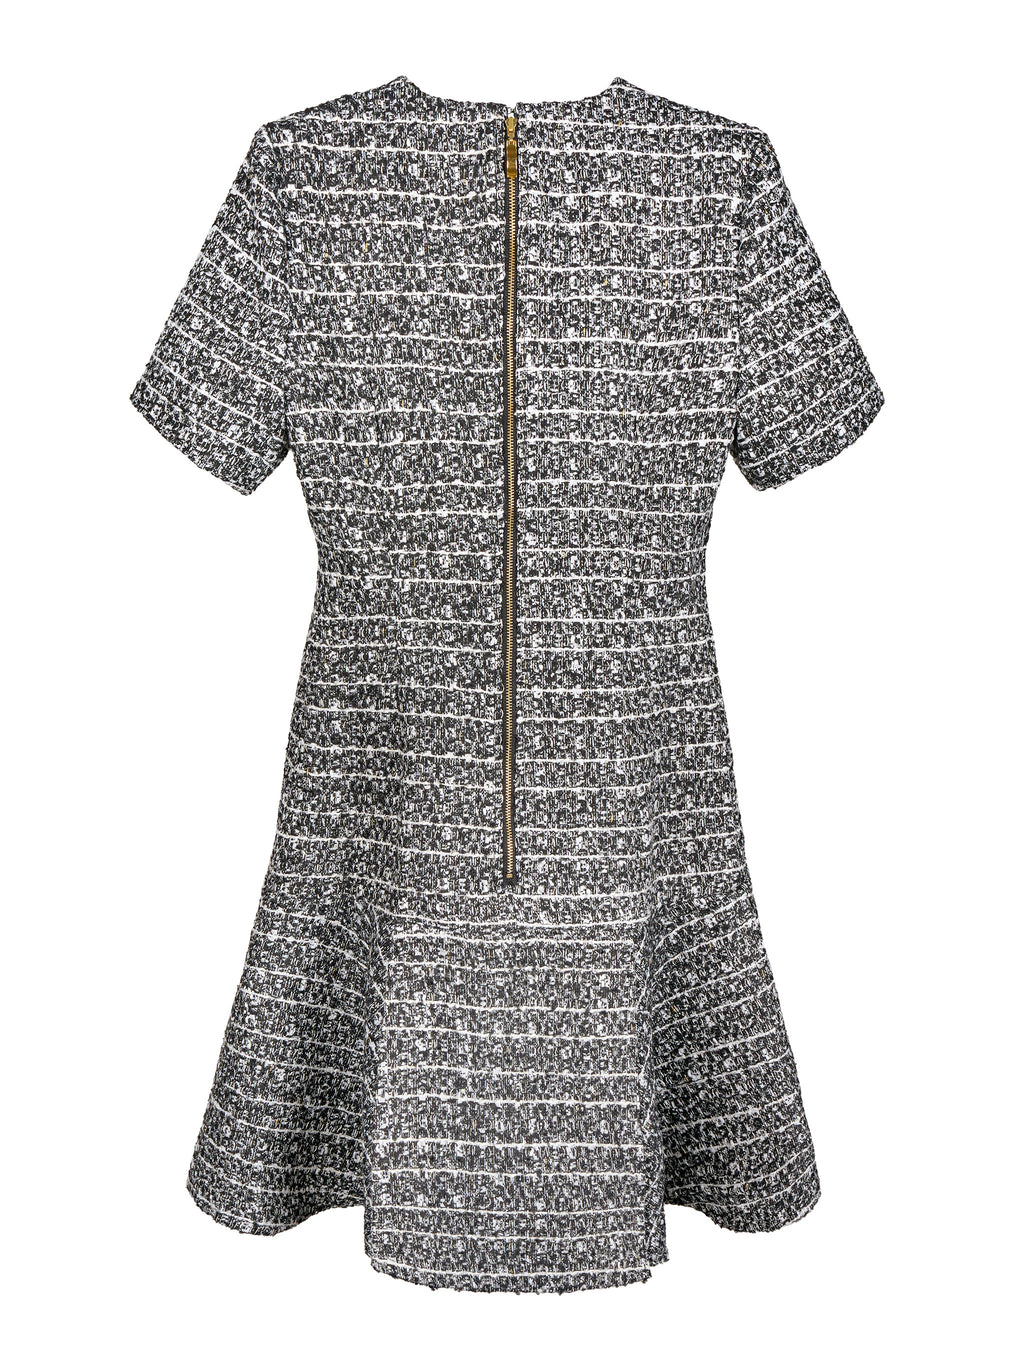 La belle tweed dress | EmiriaWiz公式オンラインストア